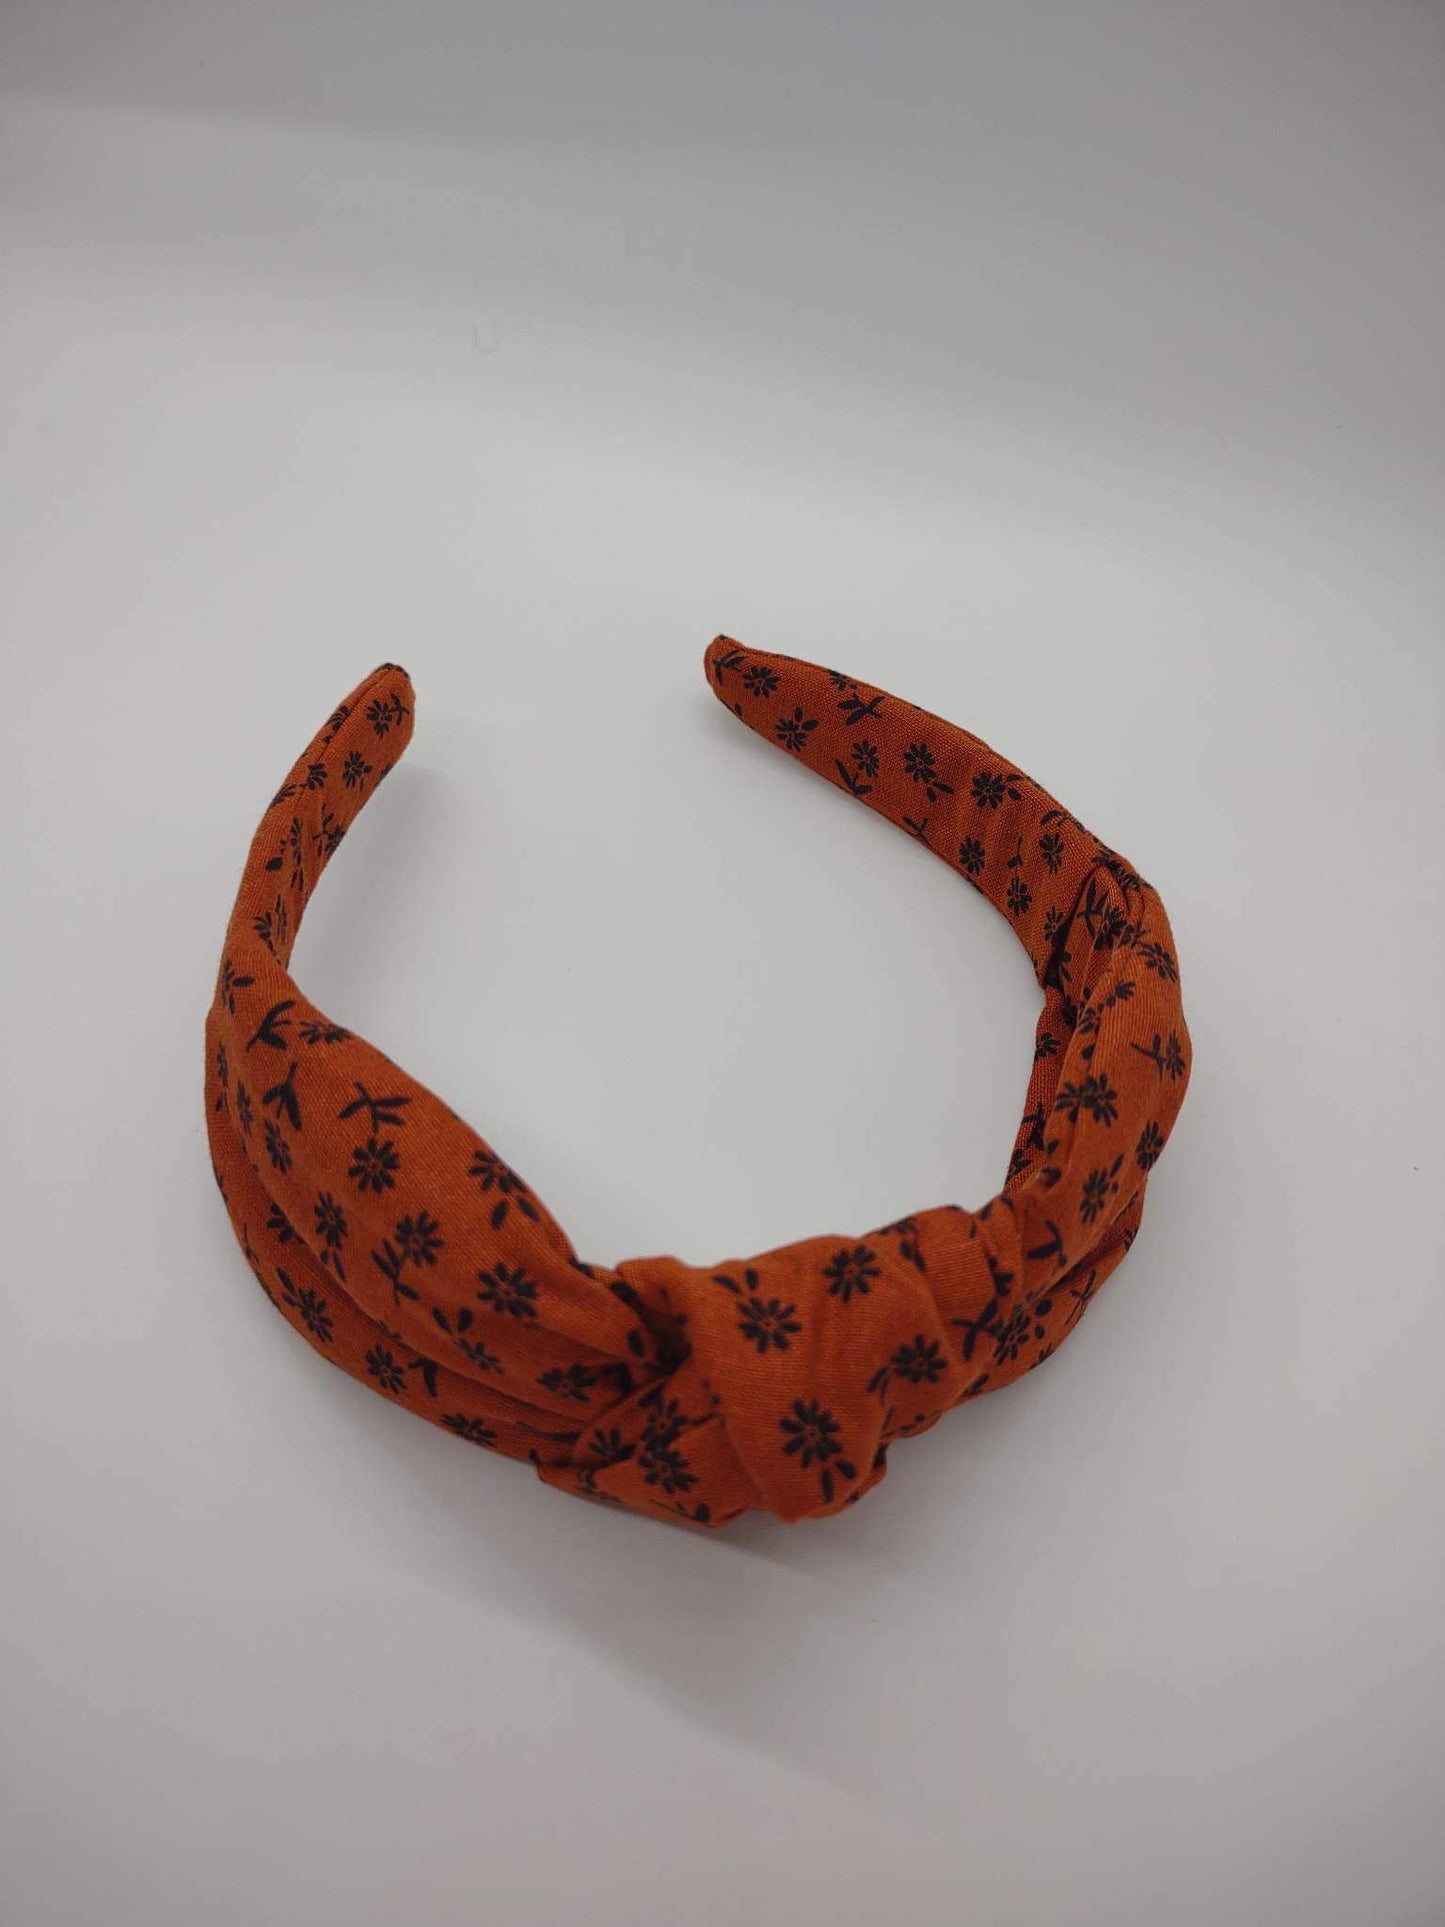 Rustic daisy knotted headband